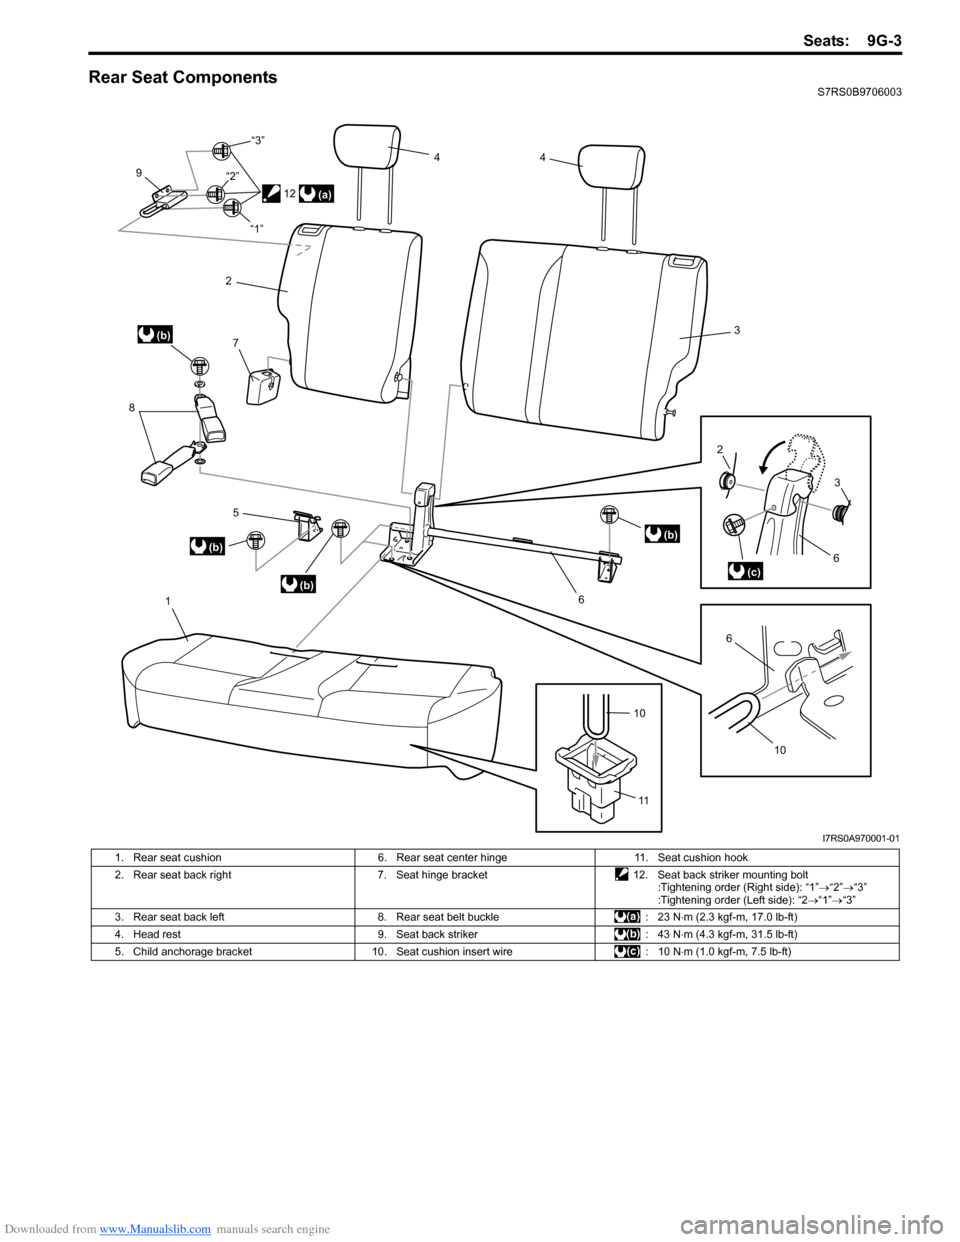 SUZUKI SWIFT 2007 2.G Service Workshop Manual Downloaded from www.Manualslib.com manuals search engine Seats: 9G-3
Rear Seat ComponentsS7RS0B9706003
1
5
(b)
(b)
(b)
8
7
9
2
4
4
3
(b)
6
6(c)
2
3
10
6
(a)
10
11
12
“1”
“2”
“3”
I7RS0A9700